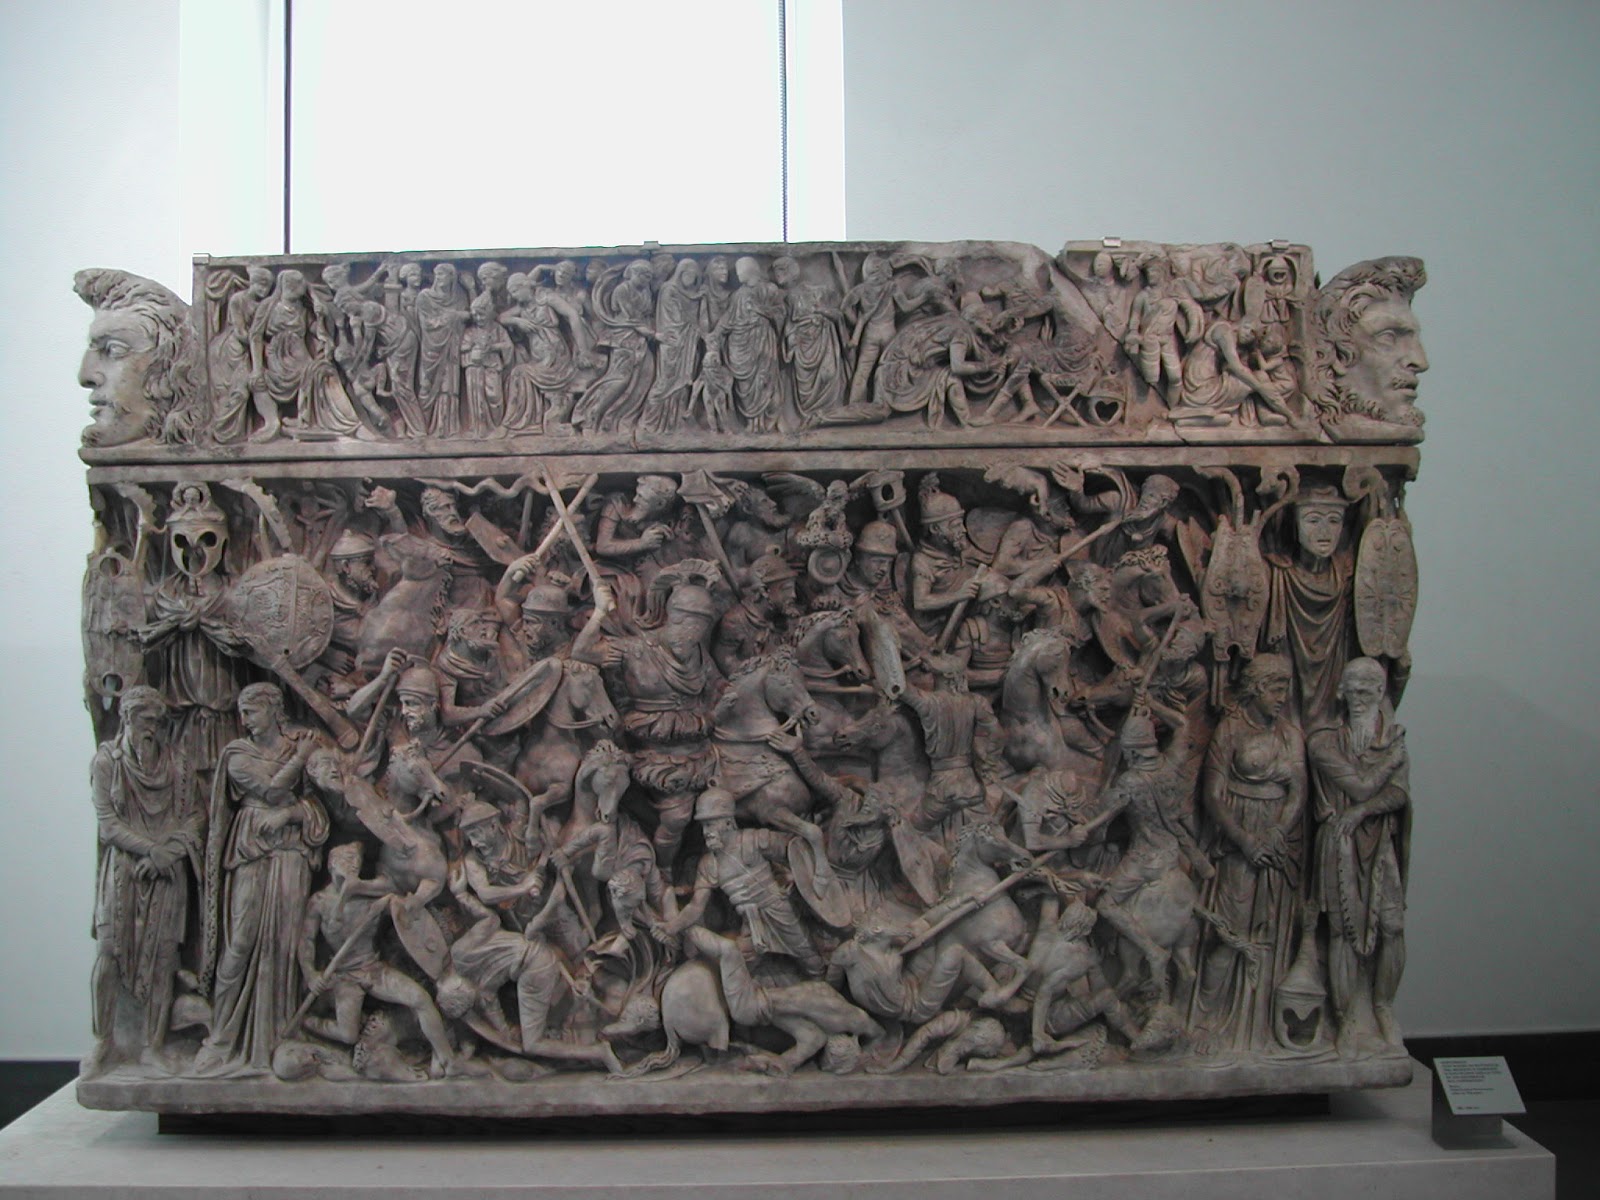 Sarcophagus The Portonaccio Sarcophagus With Battle Scene Between Romans And Germans 180 200 Ce